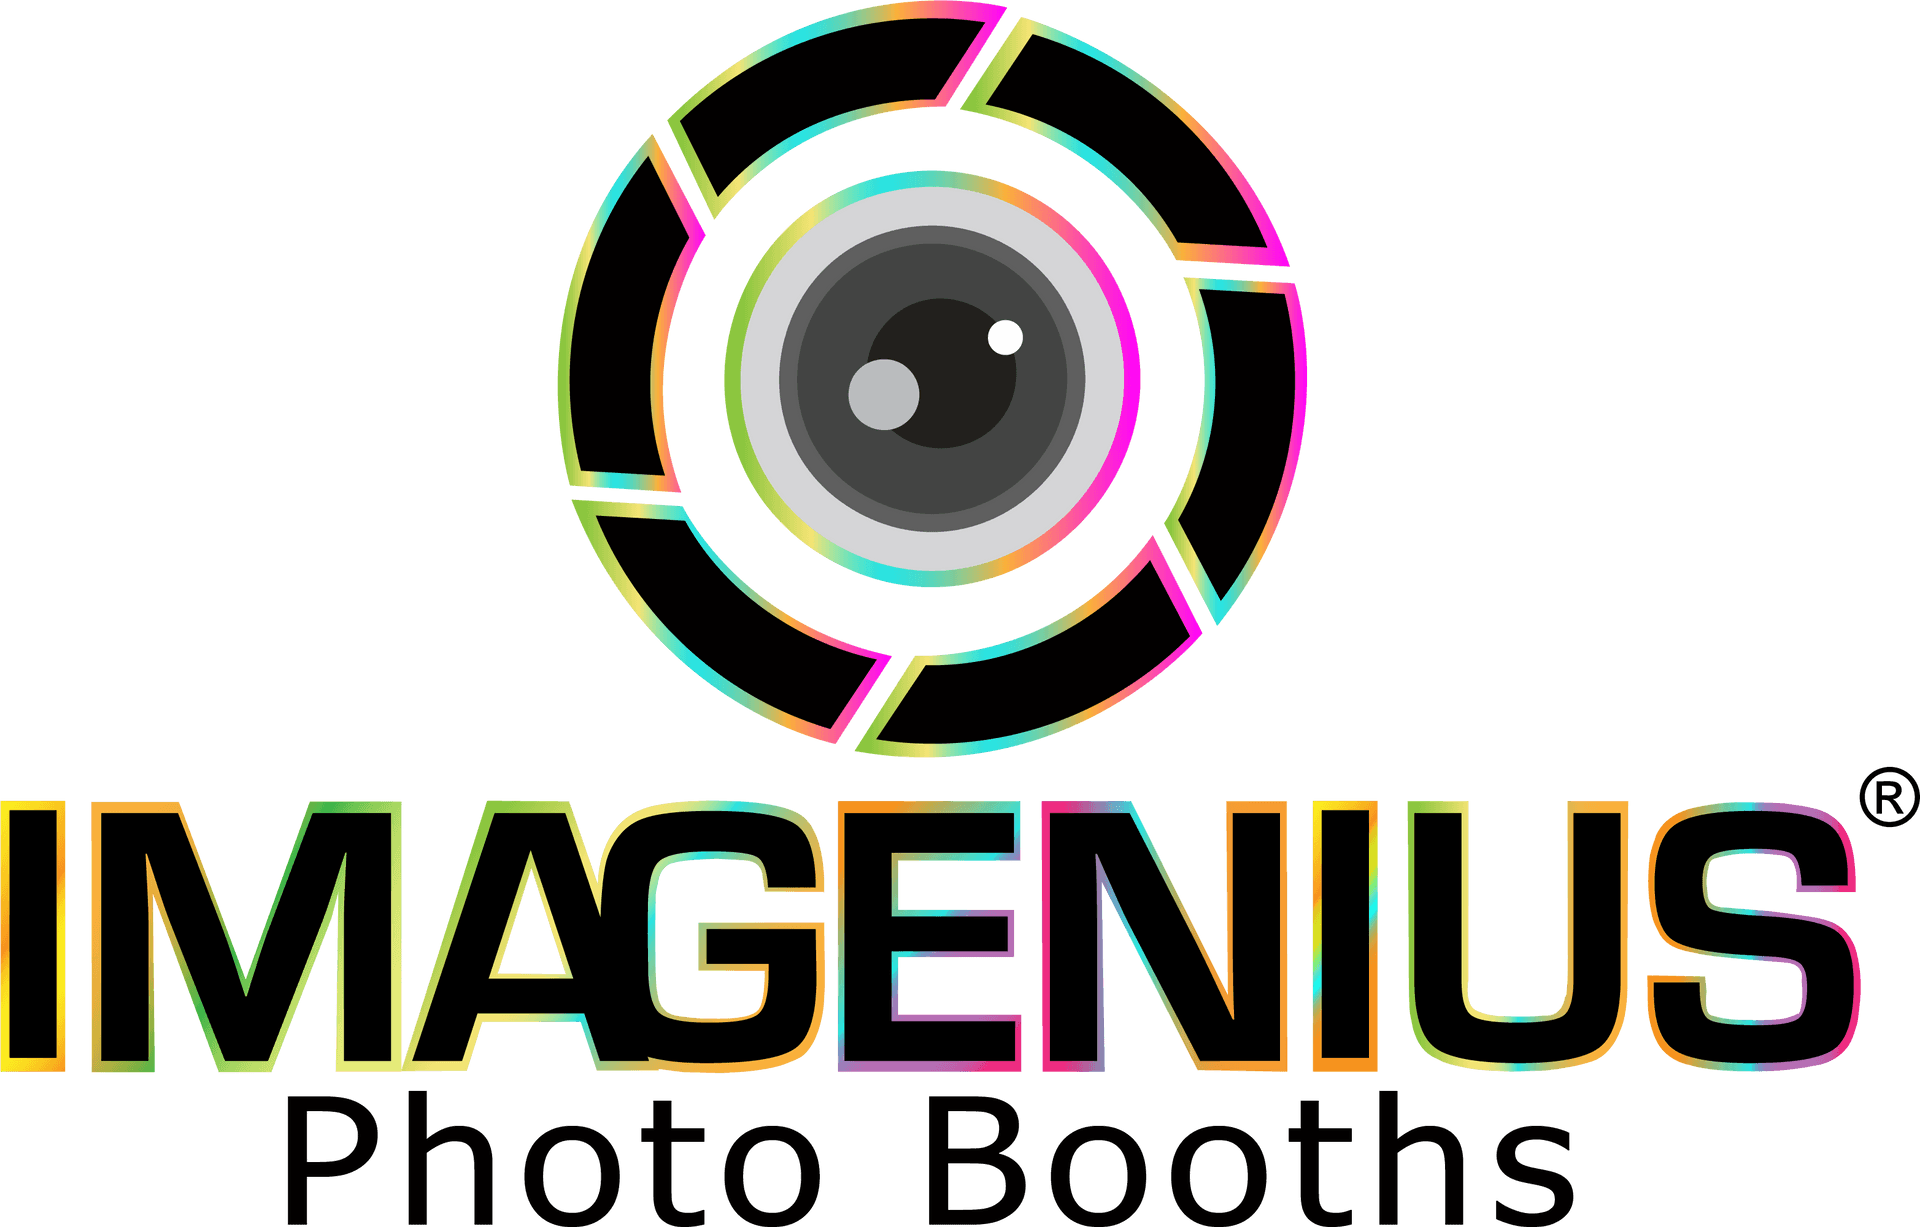 Image Genius Photo Booths Logo PNG